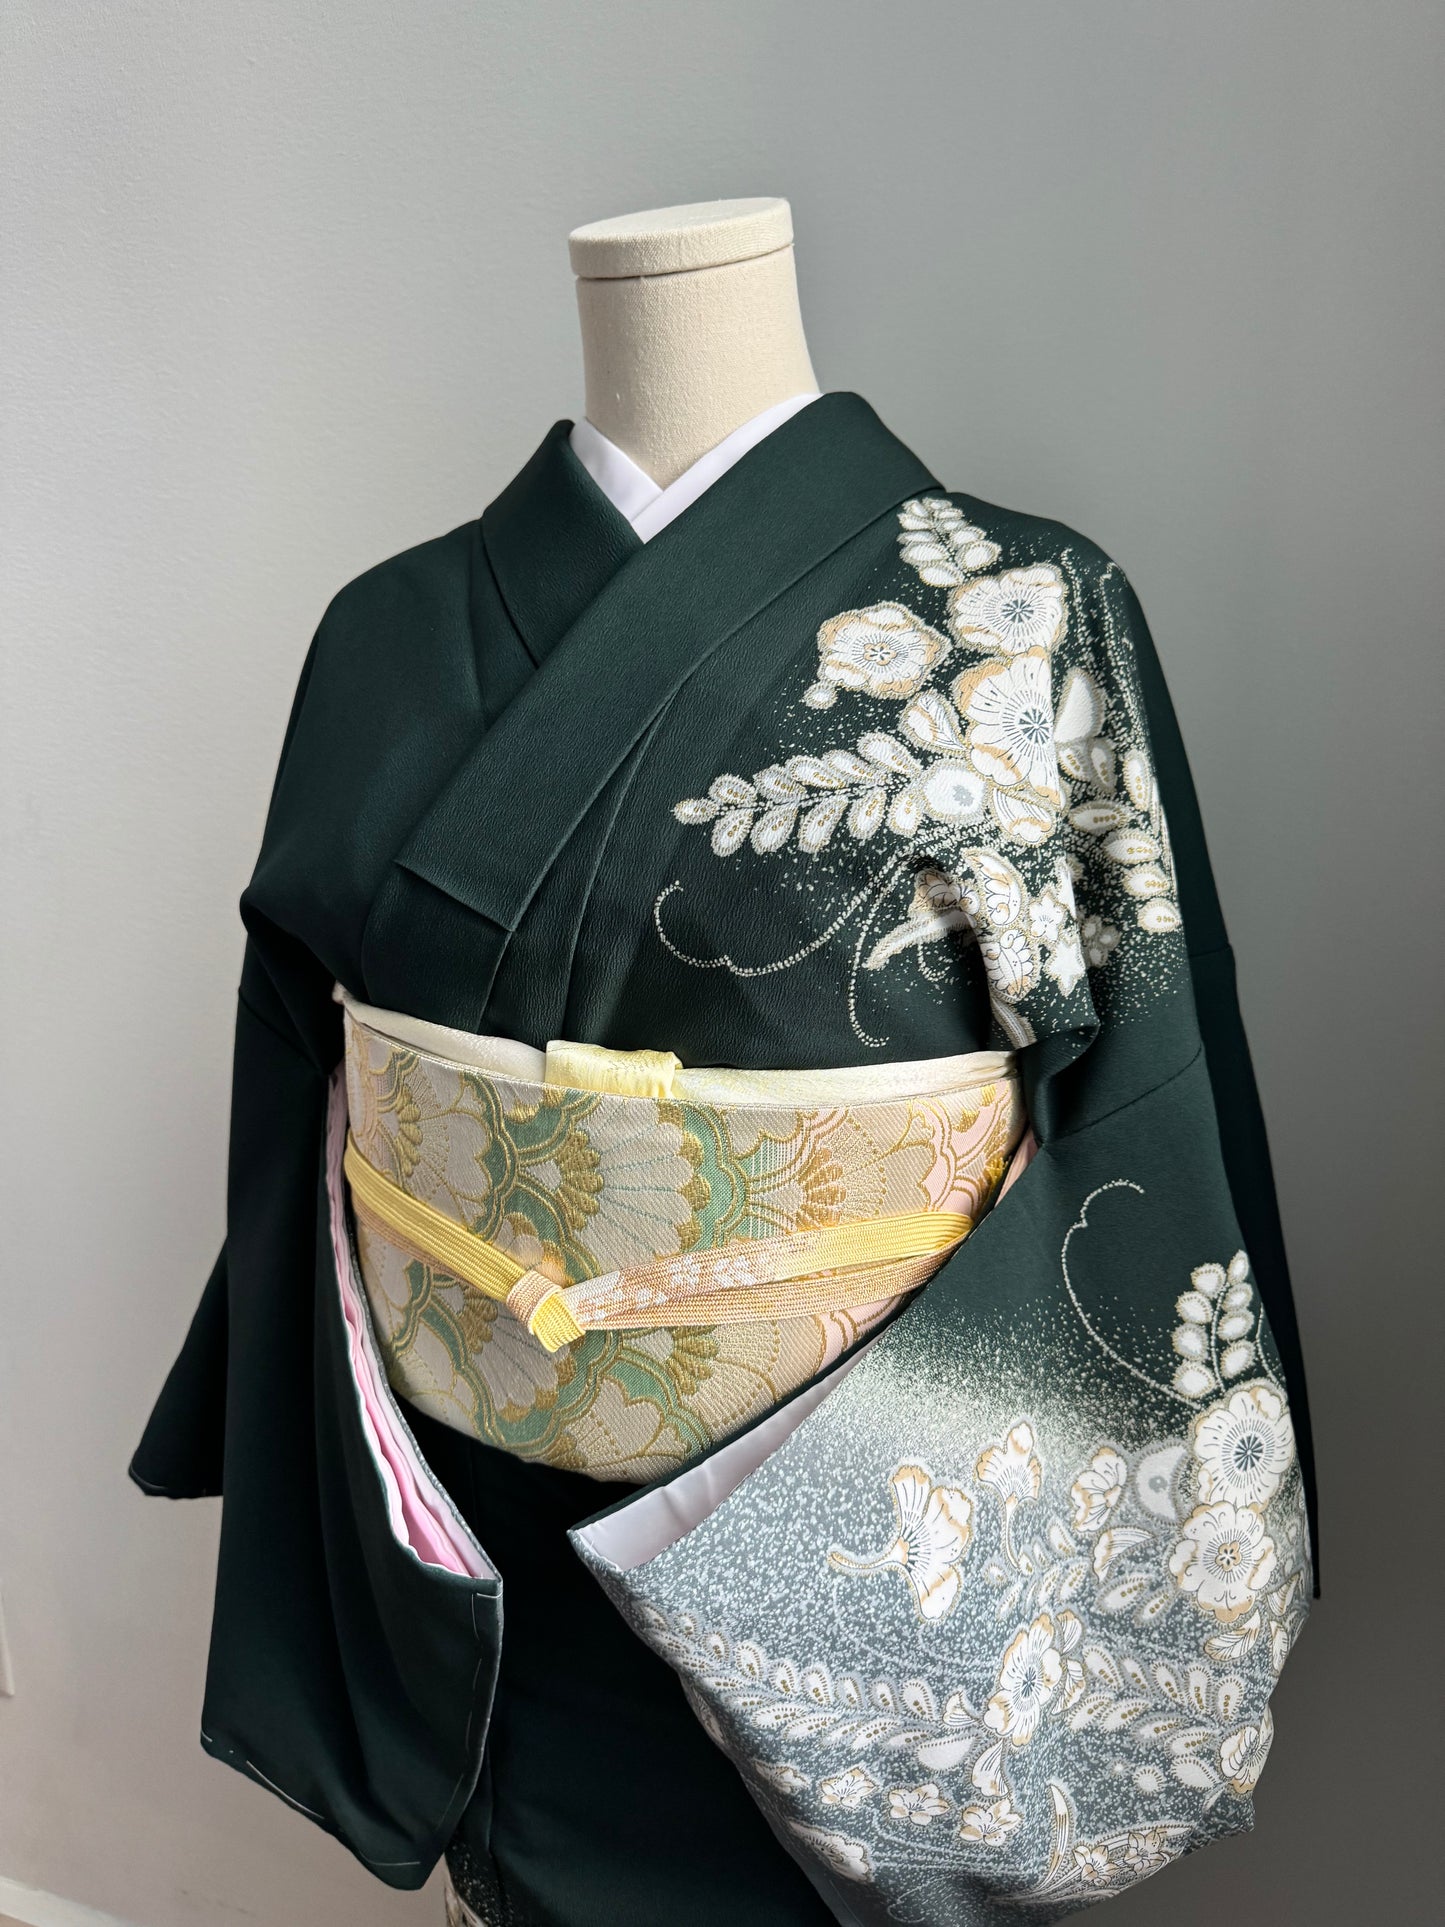 Rent for Washable Kimono (Size L)